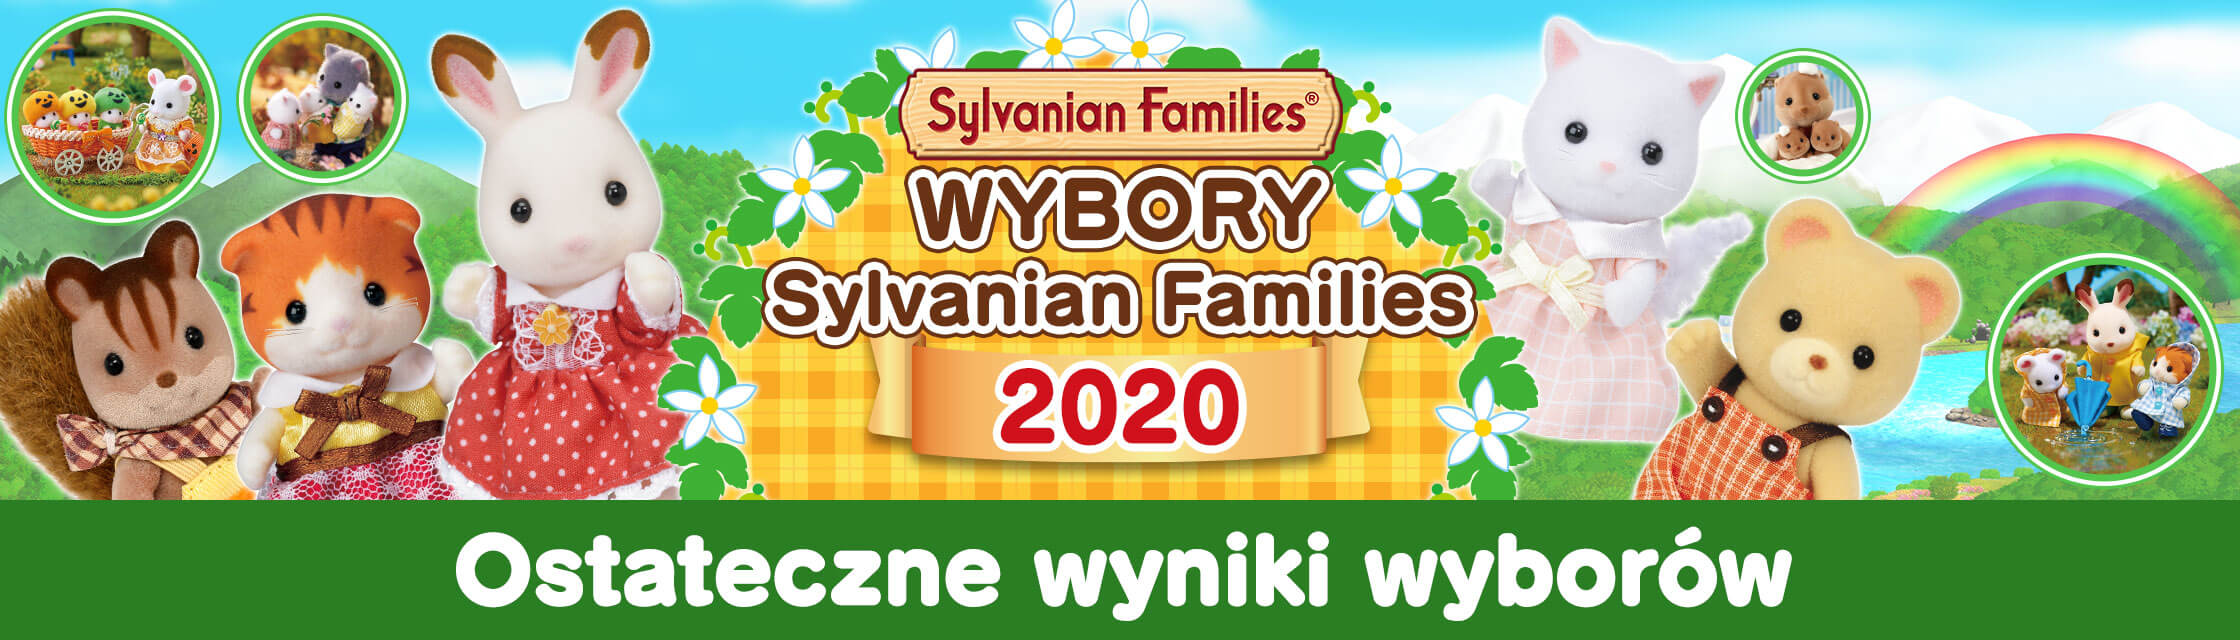 WYBORY Sylvanian Families